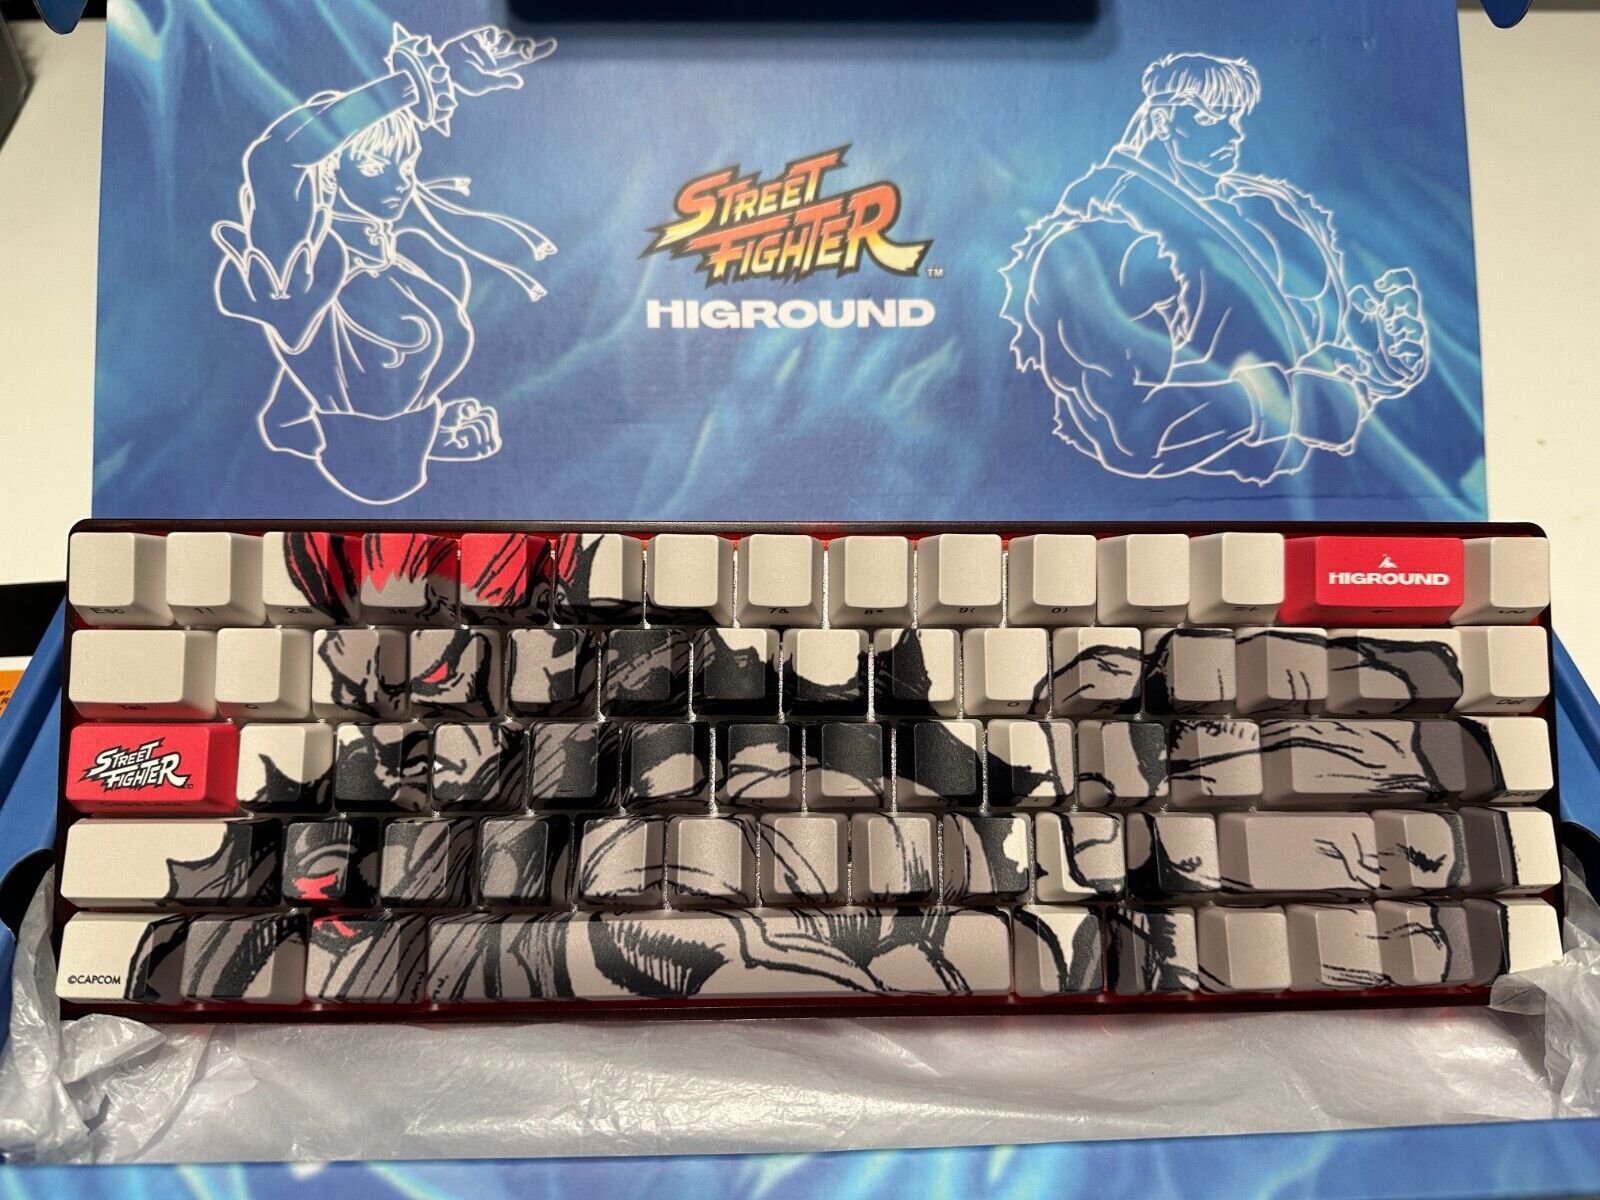 Higround x Street Fighter Akuma (Monochrome) Base 65 Limited Edition Keyboard